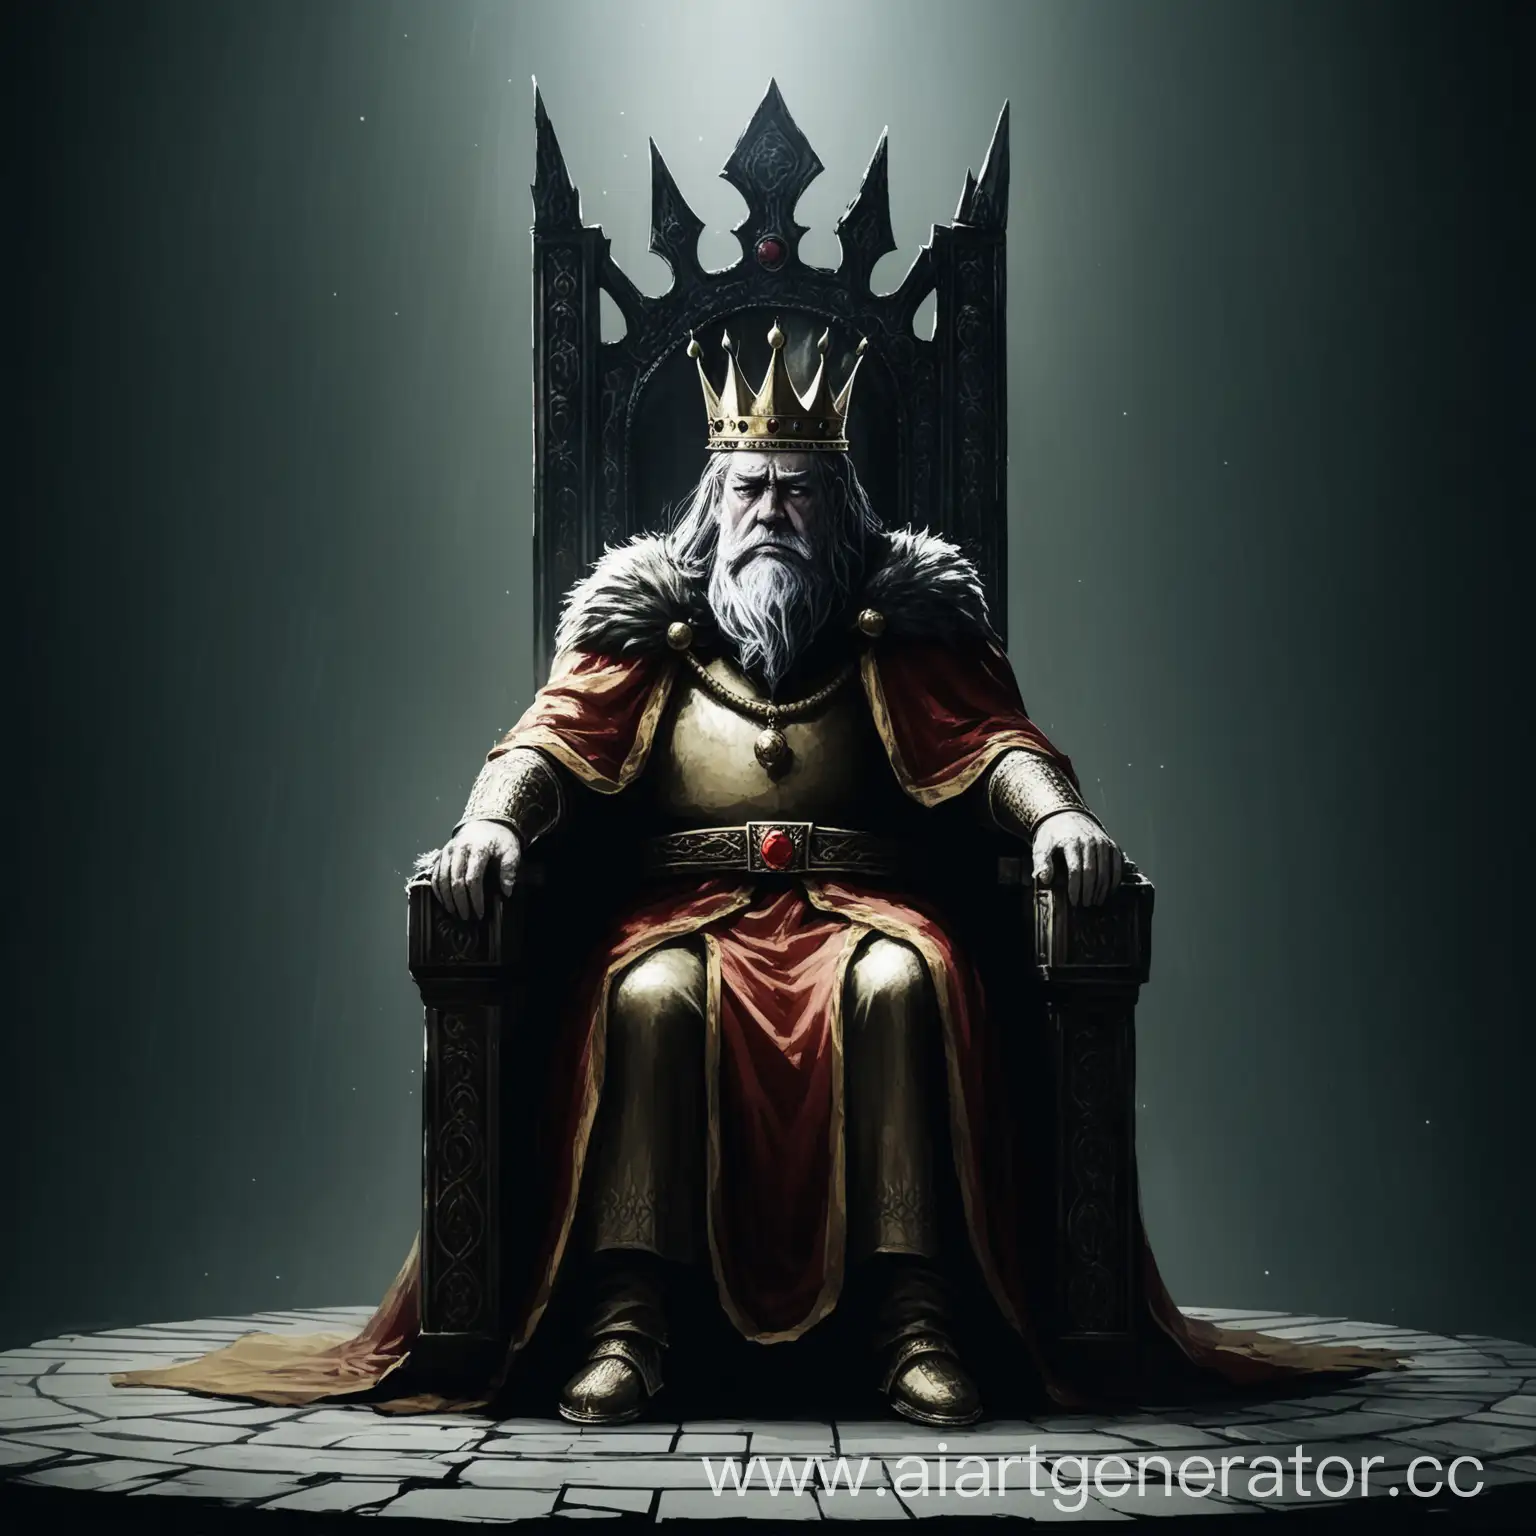 Sad-Old-King-Sitting-on-the-Throne